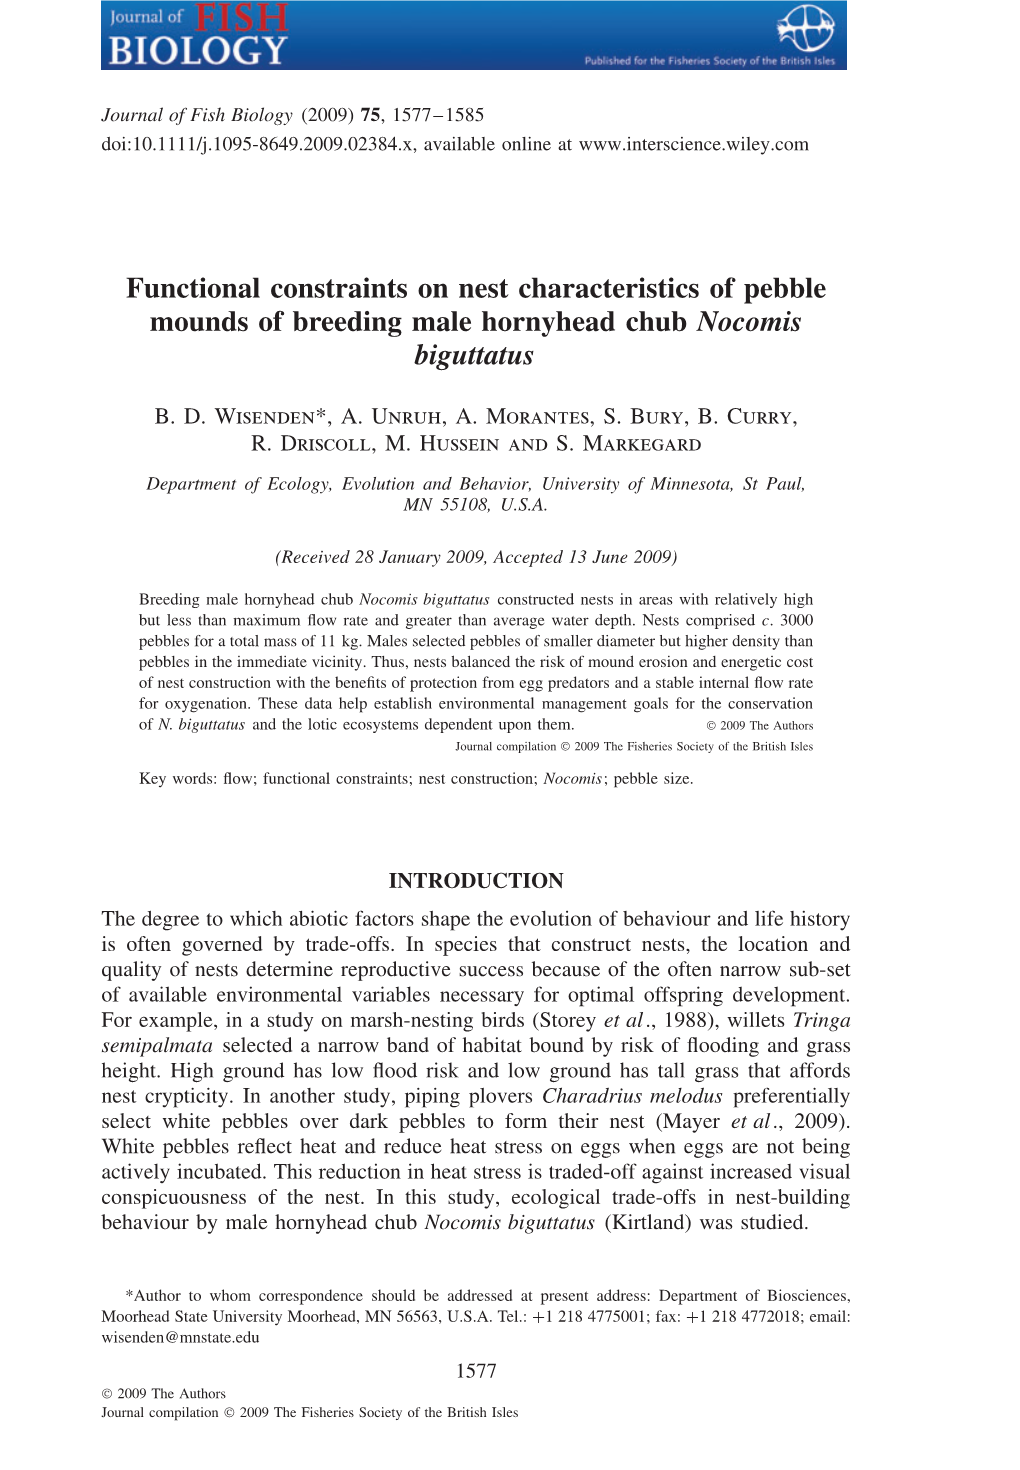 Functional Constraints on Nest Characteristics of Pebble Mounds of Breeding Male Hornyhead Chub Nocomis Biguttatus